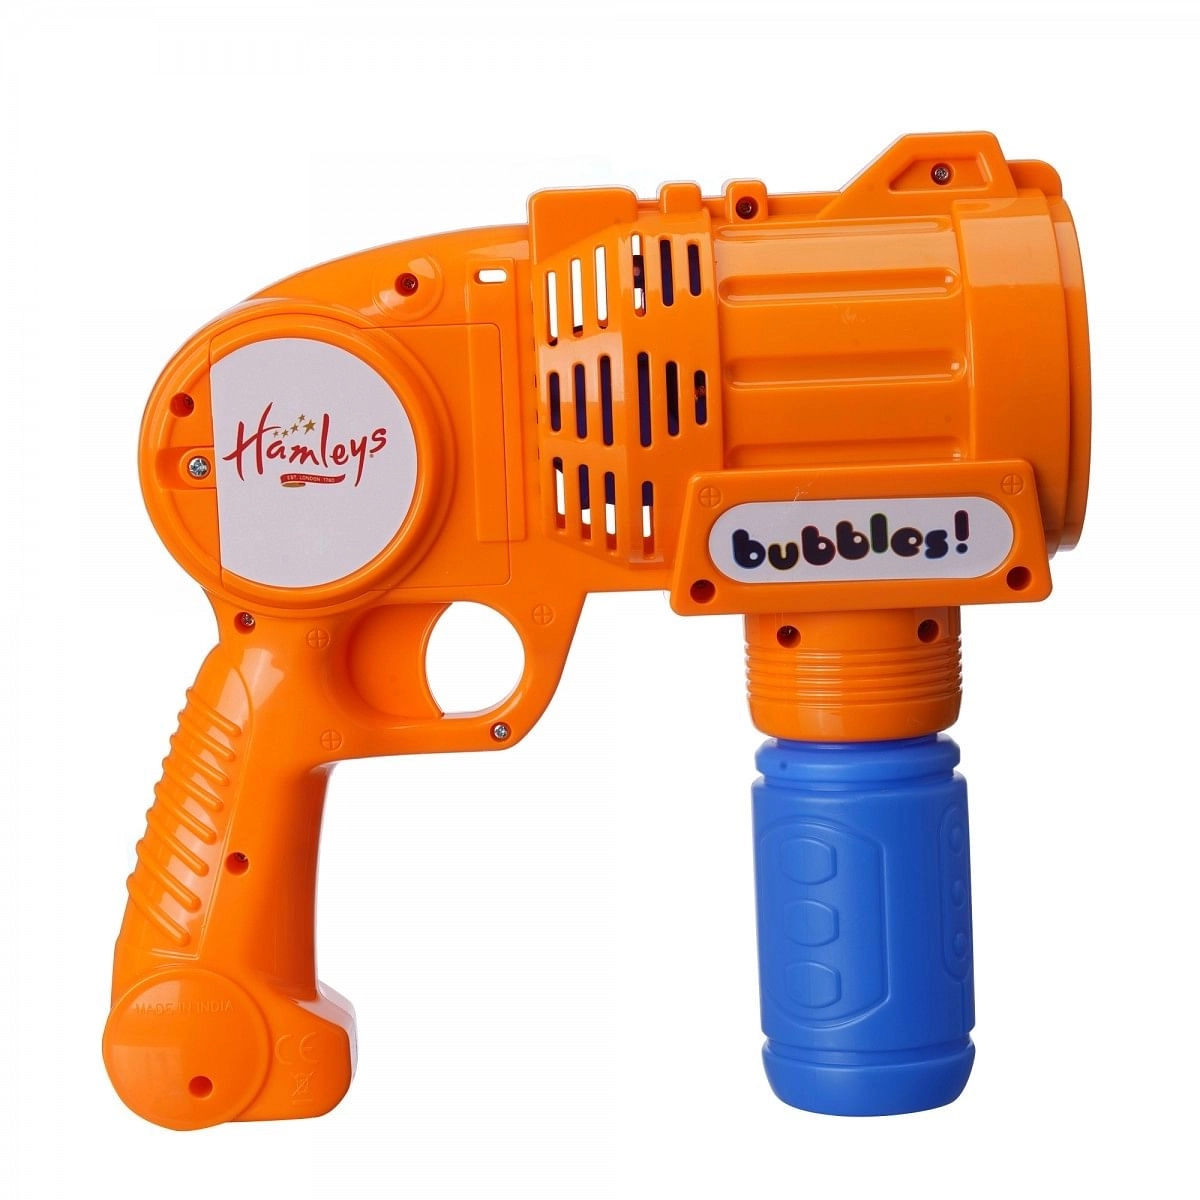 Hamleys Bubble Blaster With LED Light & 110 ml Bubble Solution, Impulse Toys for Kids, Orange 3Y+